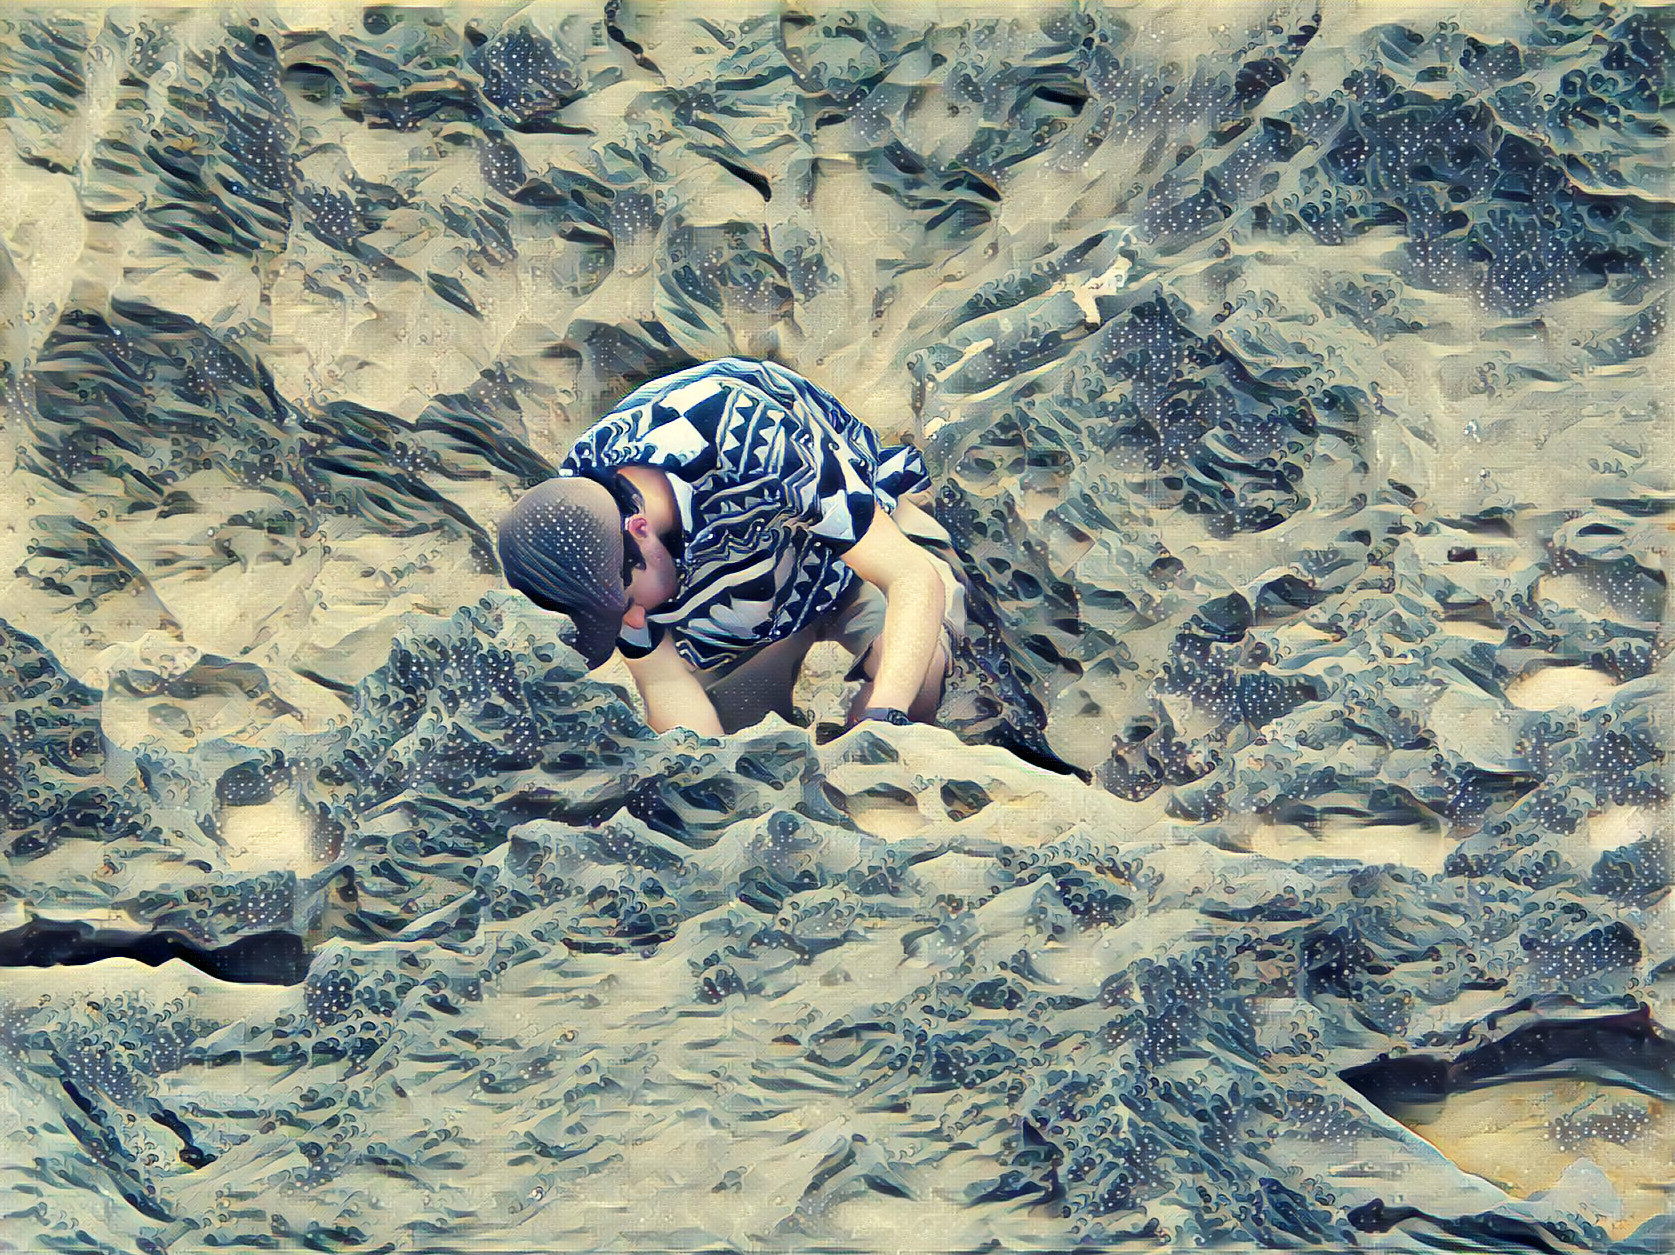 Riding The Waves - Sergio Doing Basic Rock Climbing